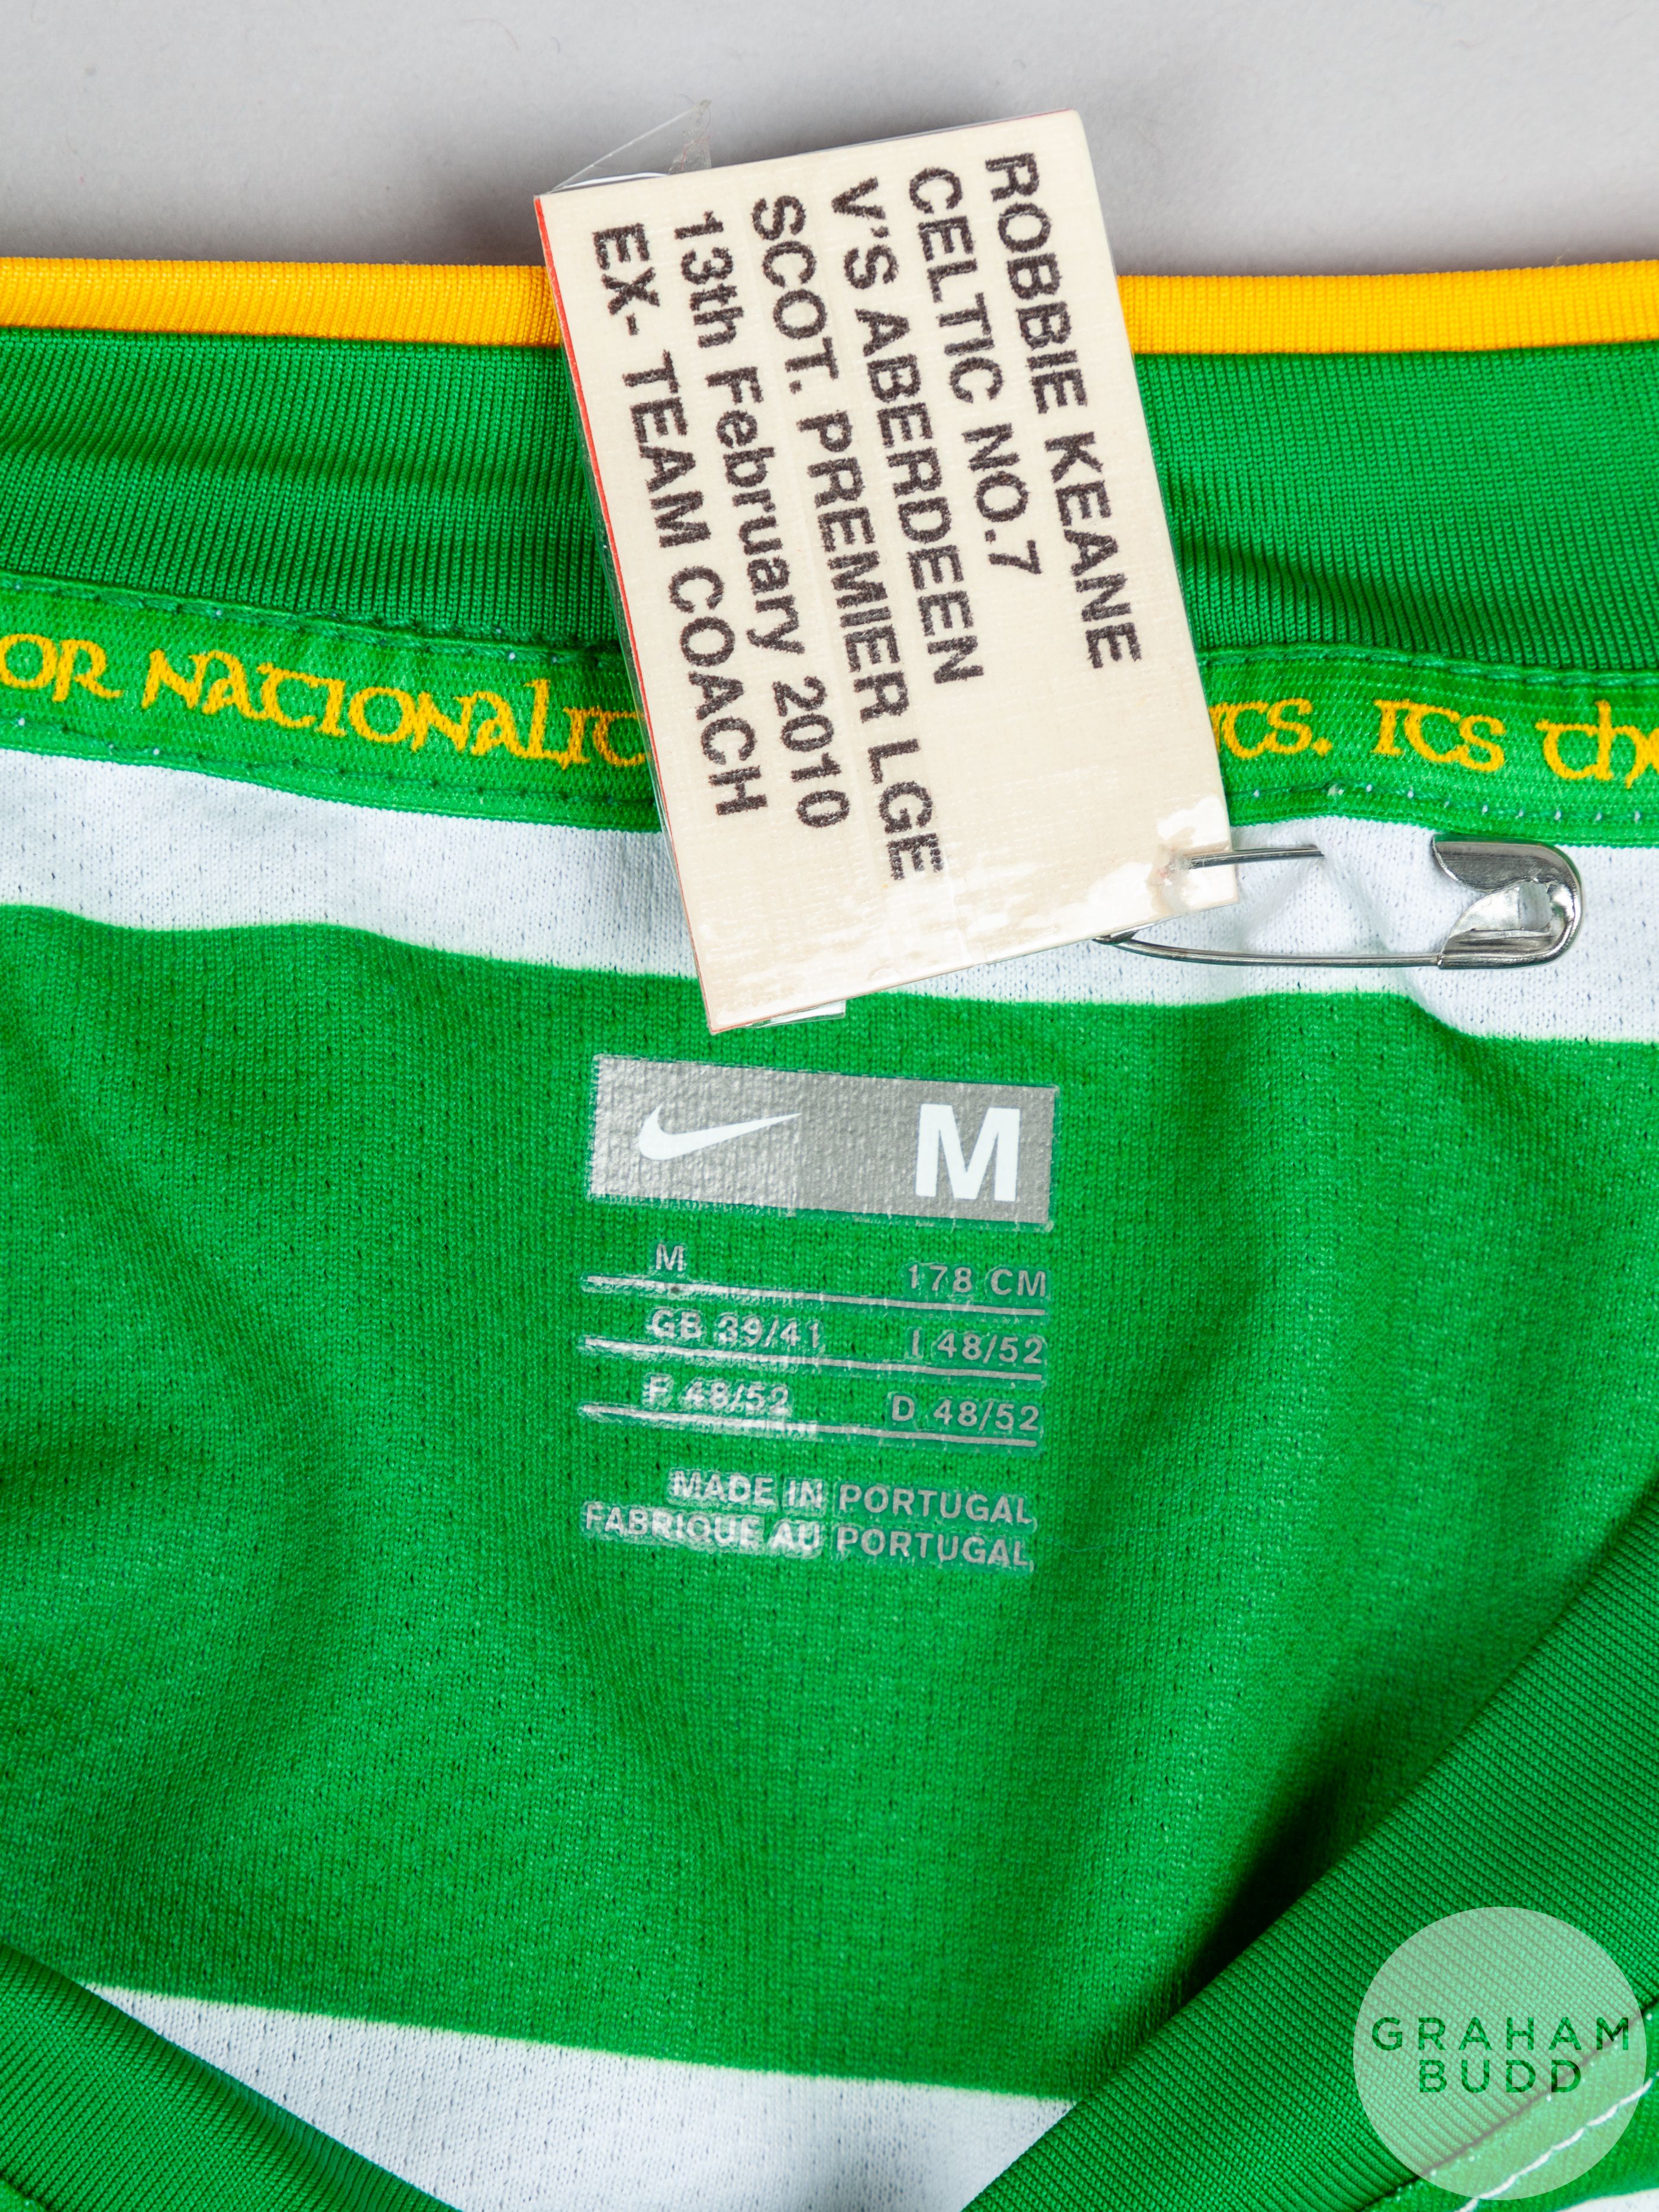 Robbie Keane green and white No.7 Celtic v. Aberdeen short-sleeved shirt - Image 4 of 5